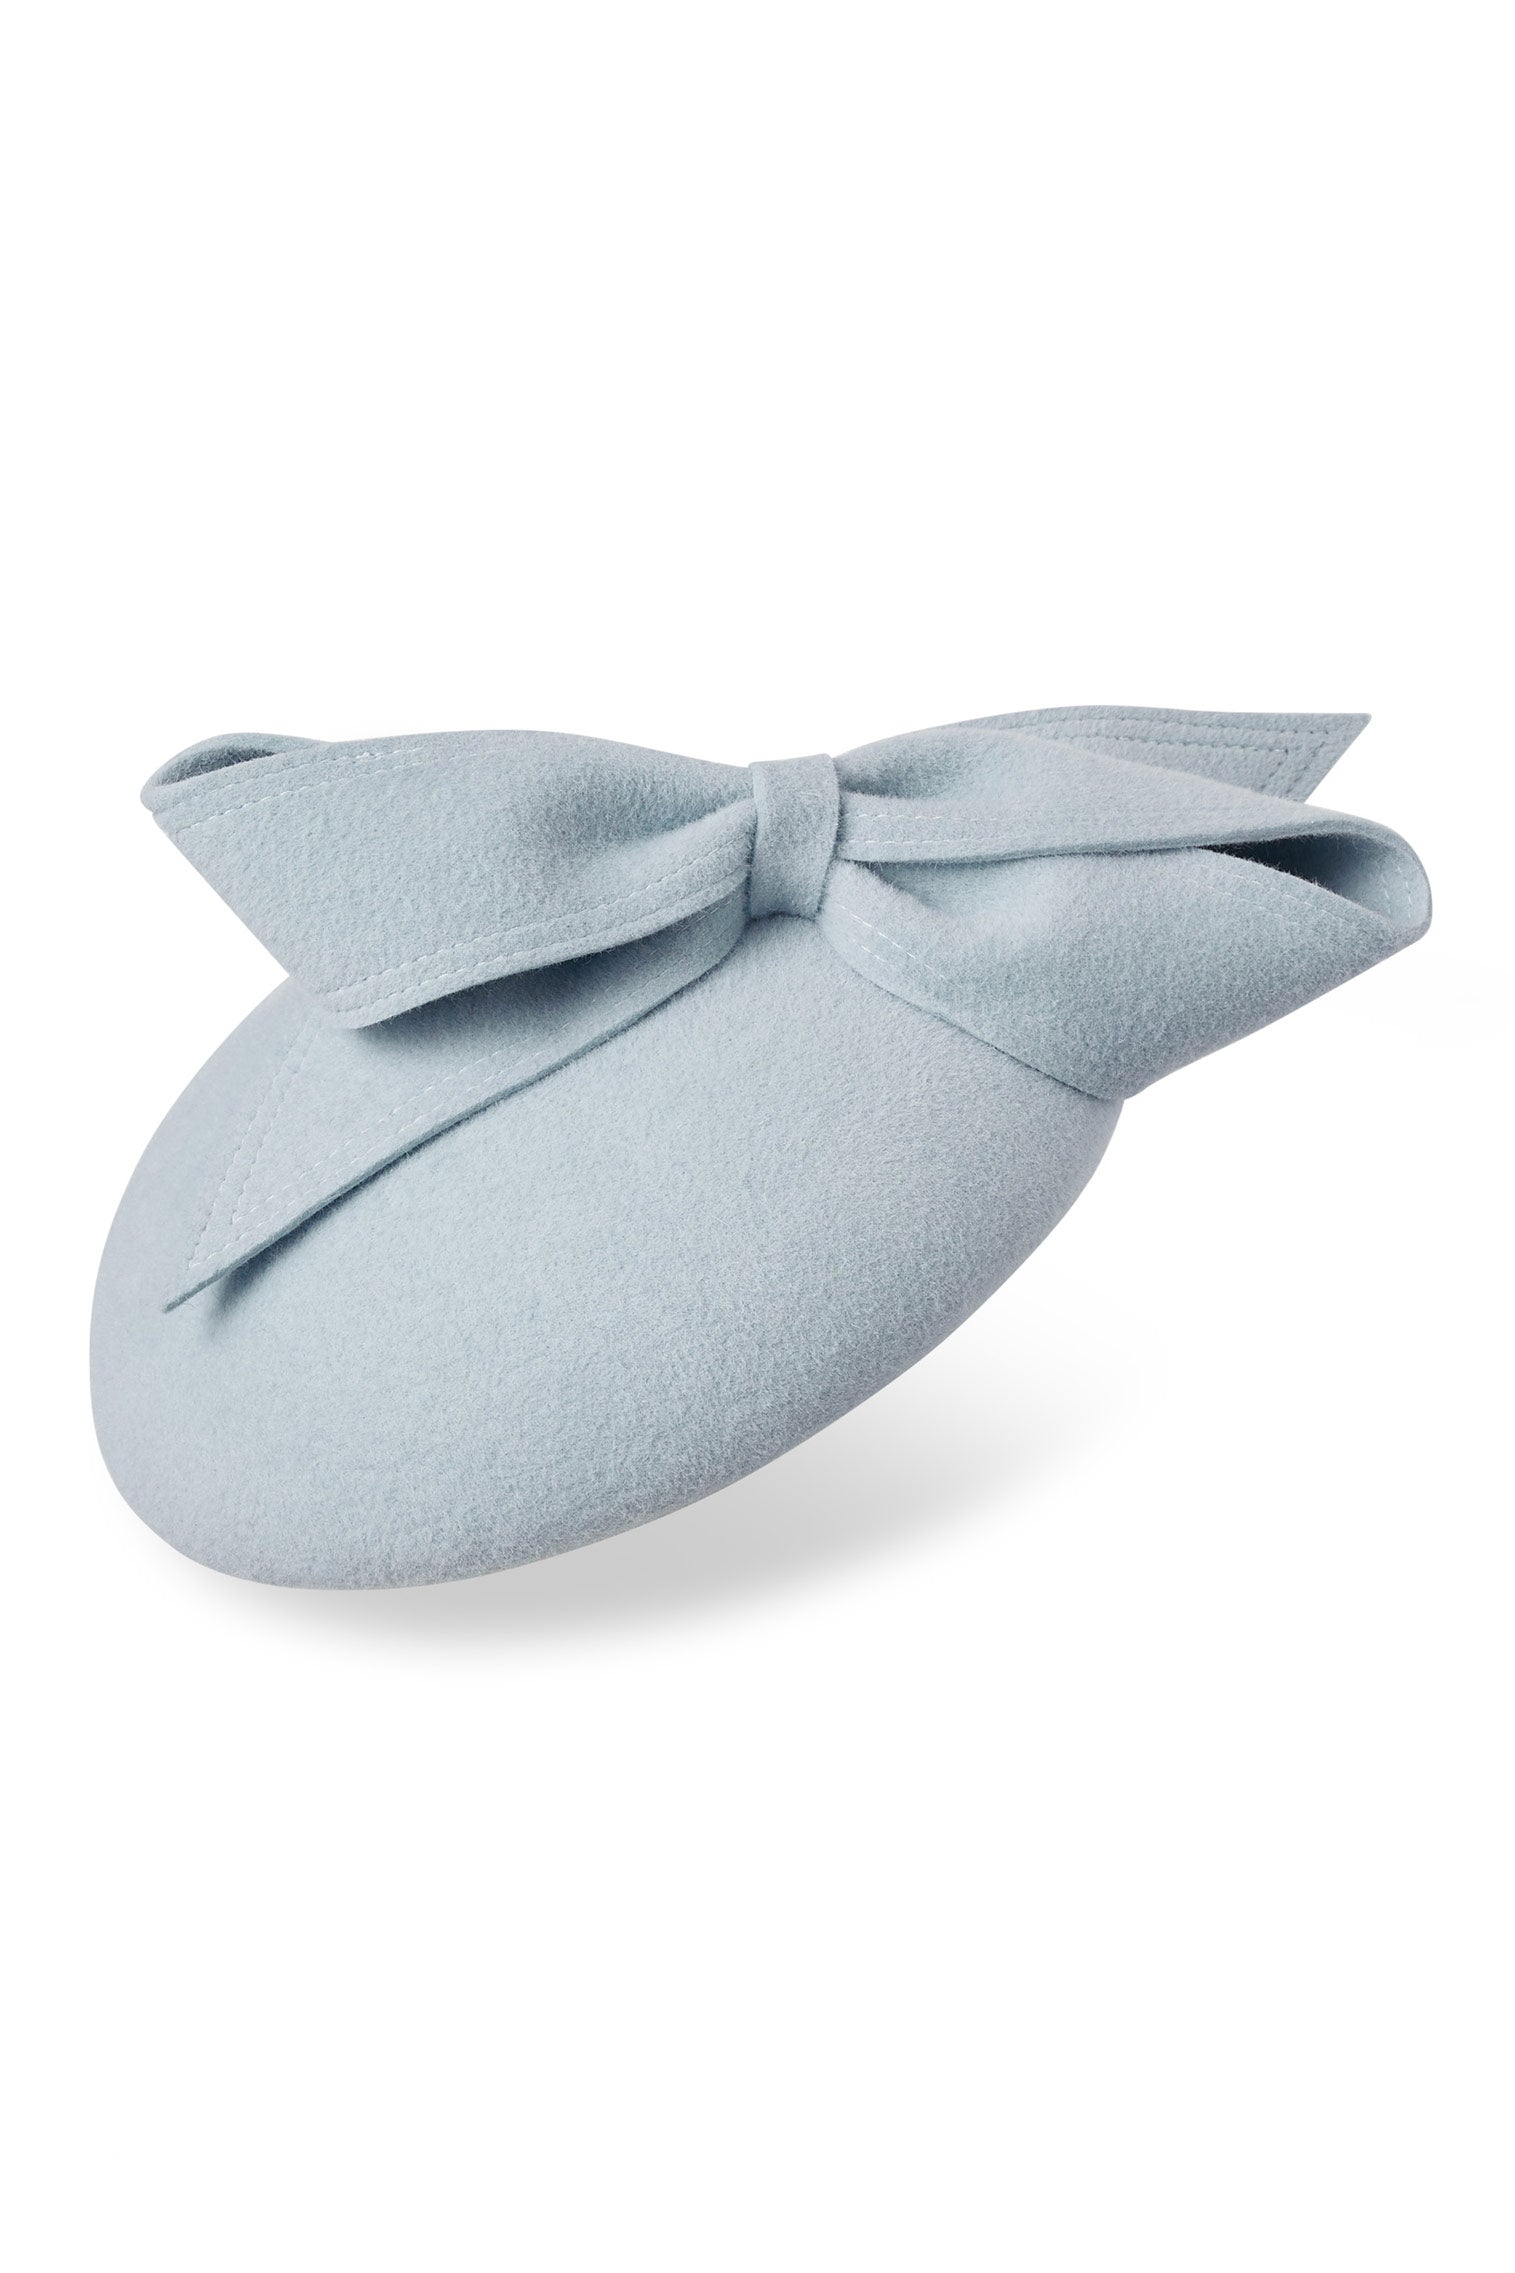 Lana Light Blue Button Hat - Royal Ascot Hats - Lock & Co. Hatters London UK